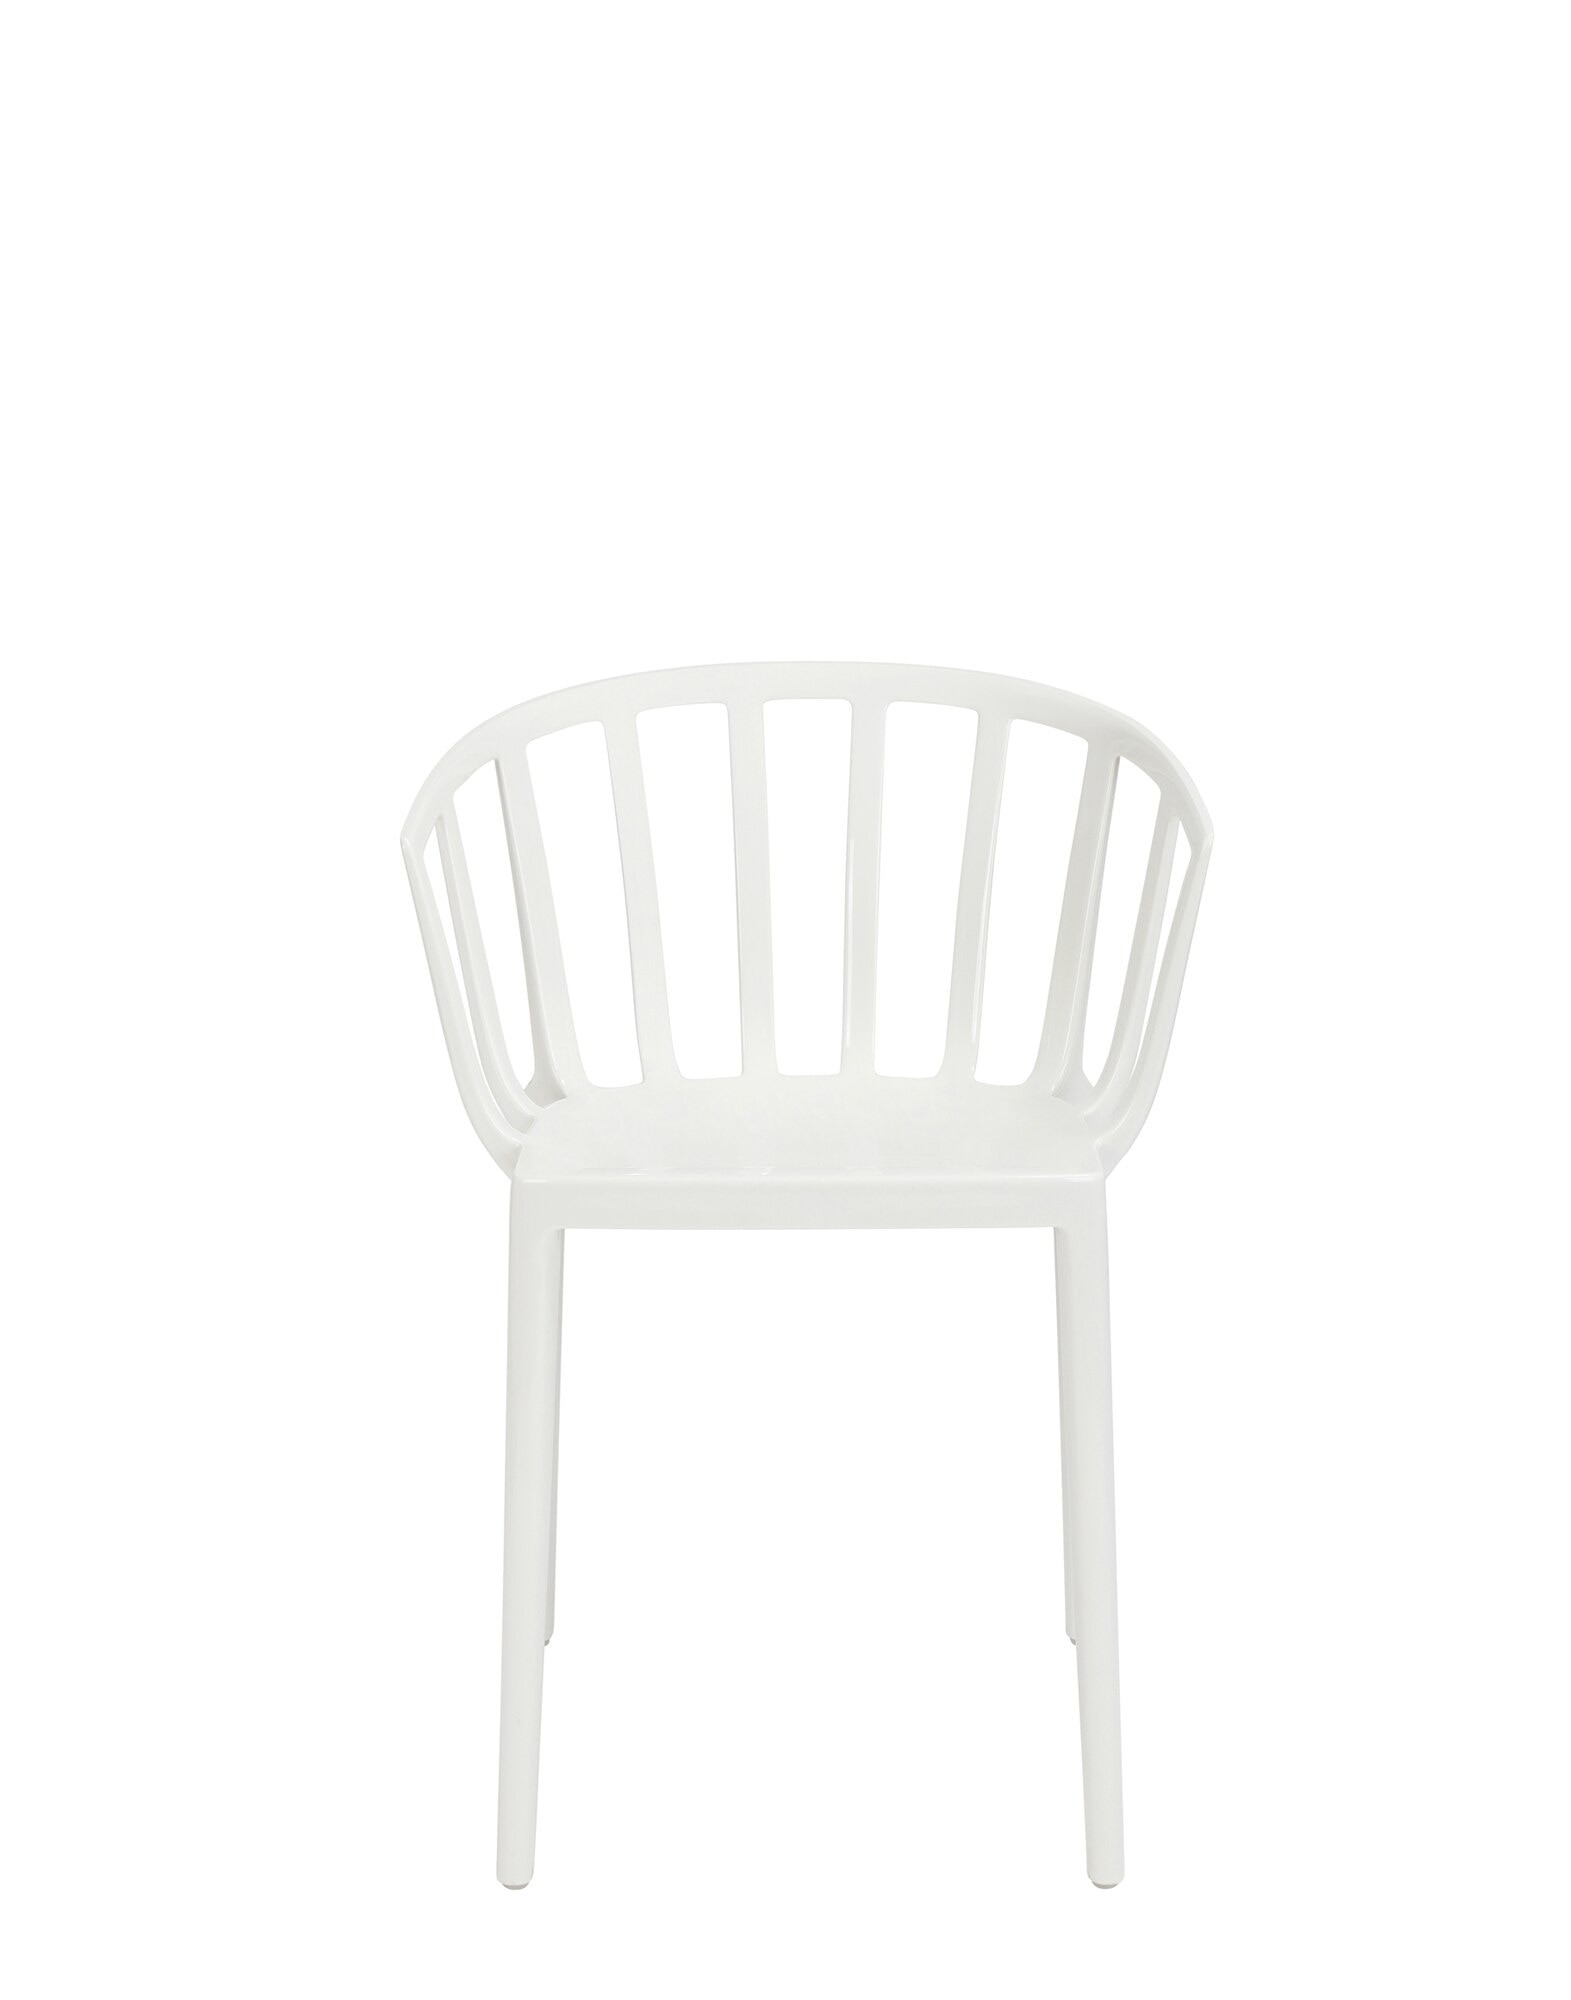 Kartell Chairs VENICE (2 chairs) WHITE | Kartell